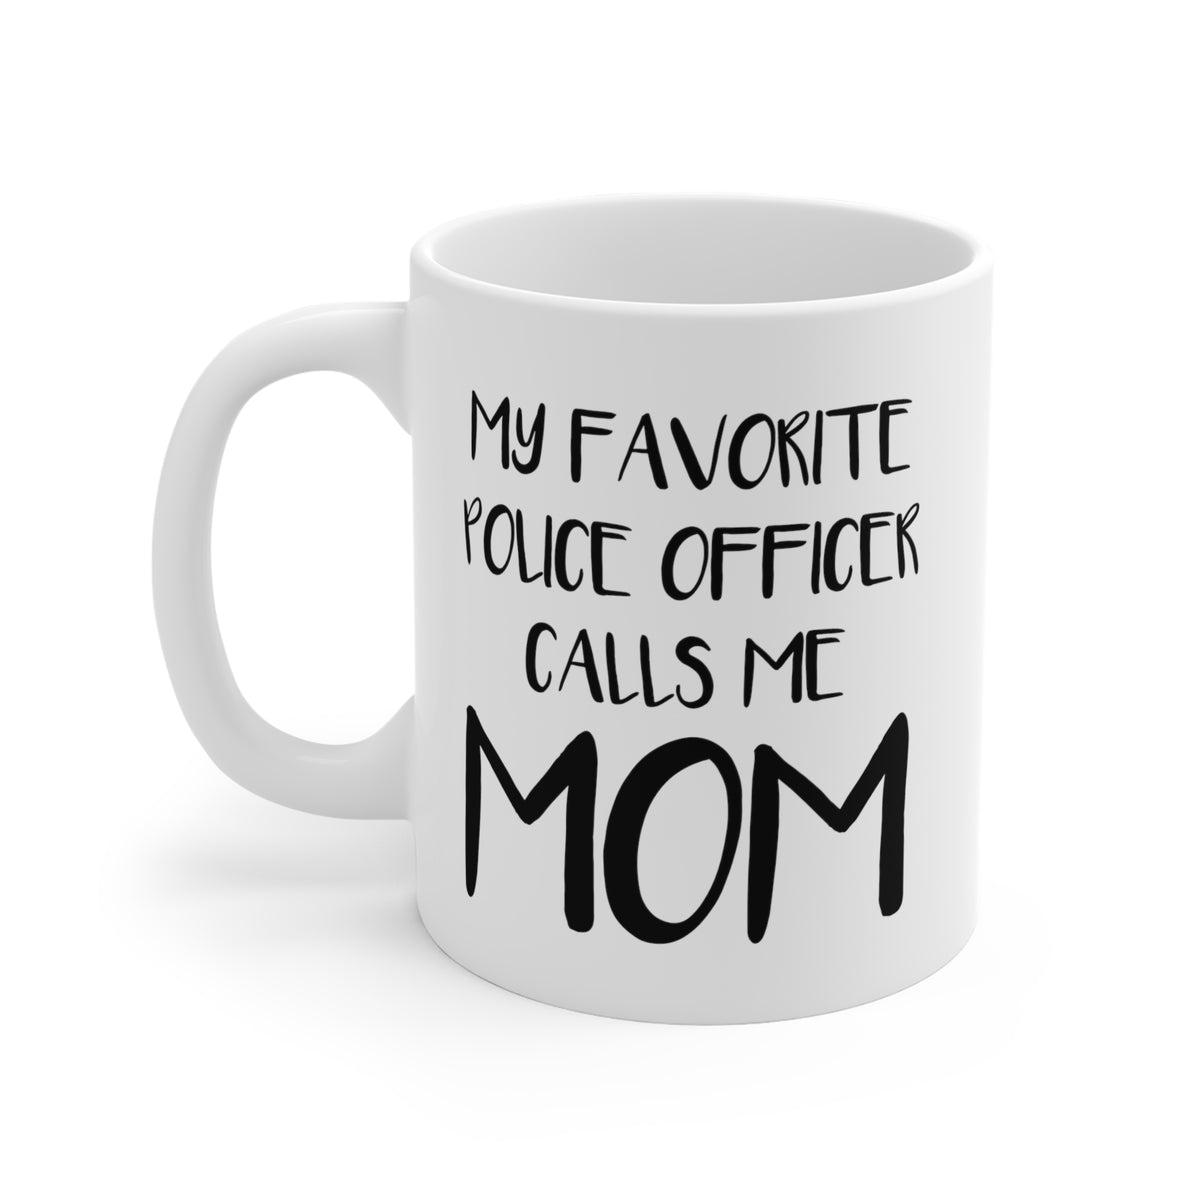 Police Mom Gifts - My Favorite Police Officer Calls Me Mom - Police Mom White Coffee Mug CA